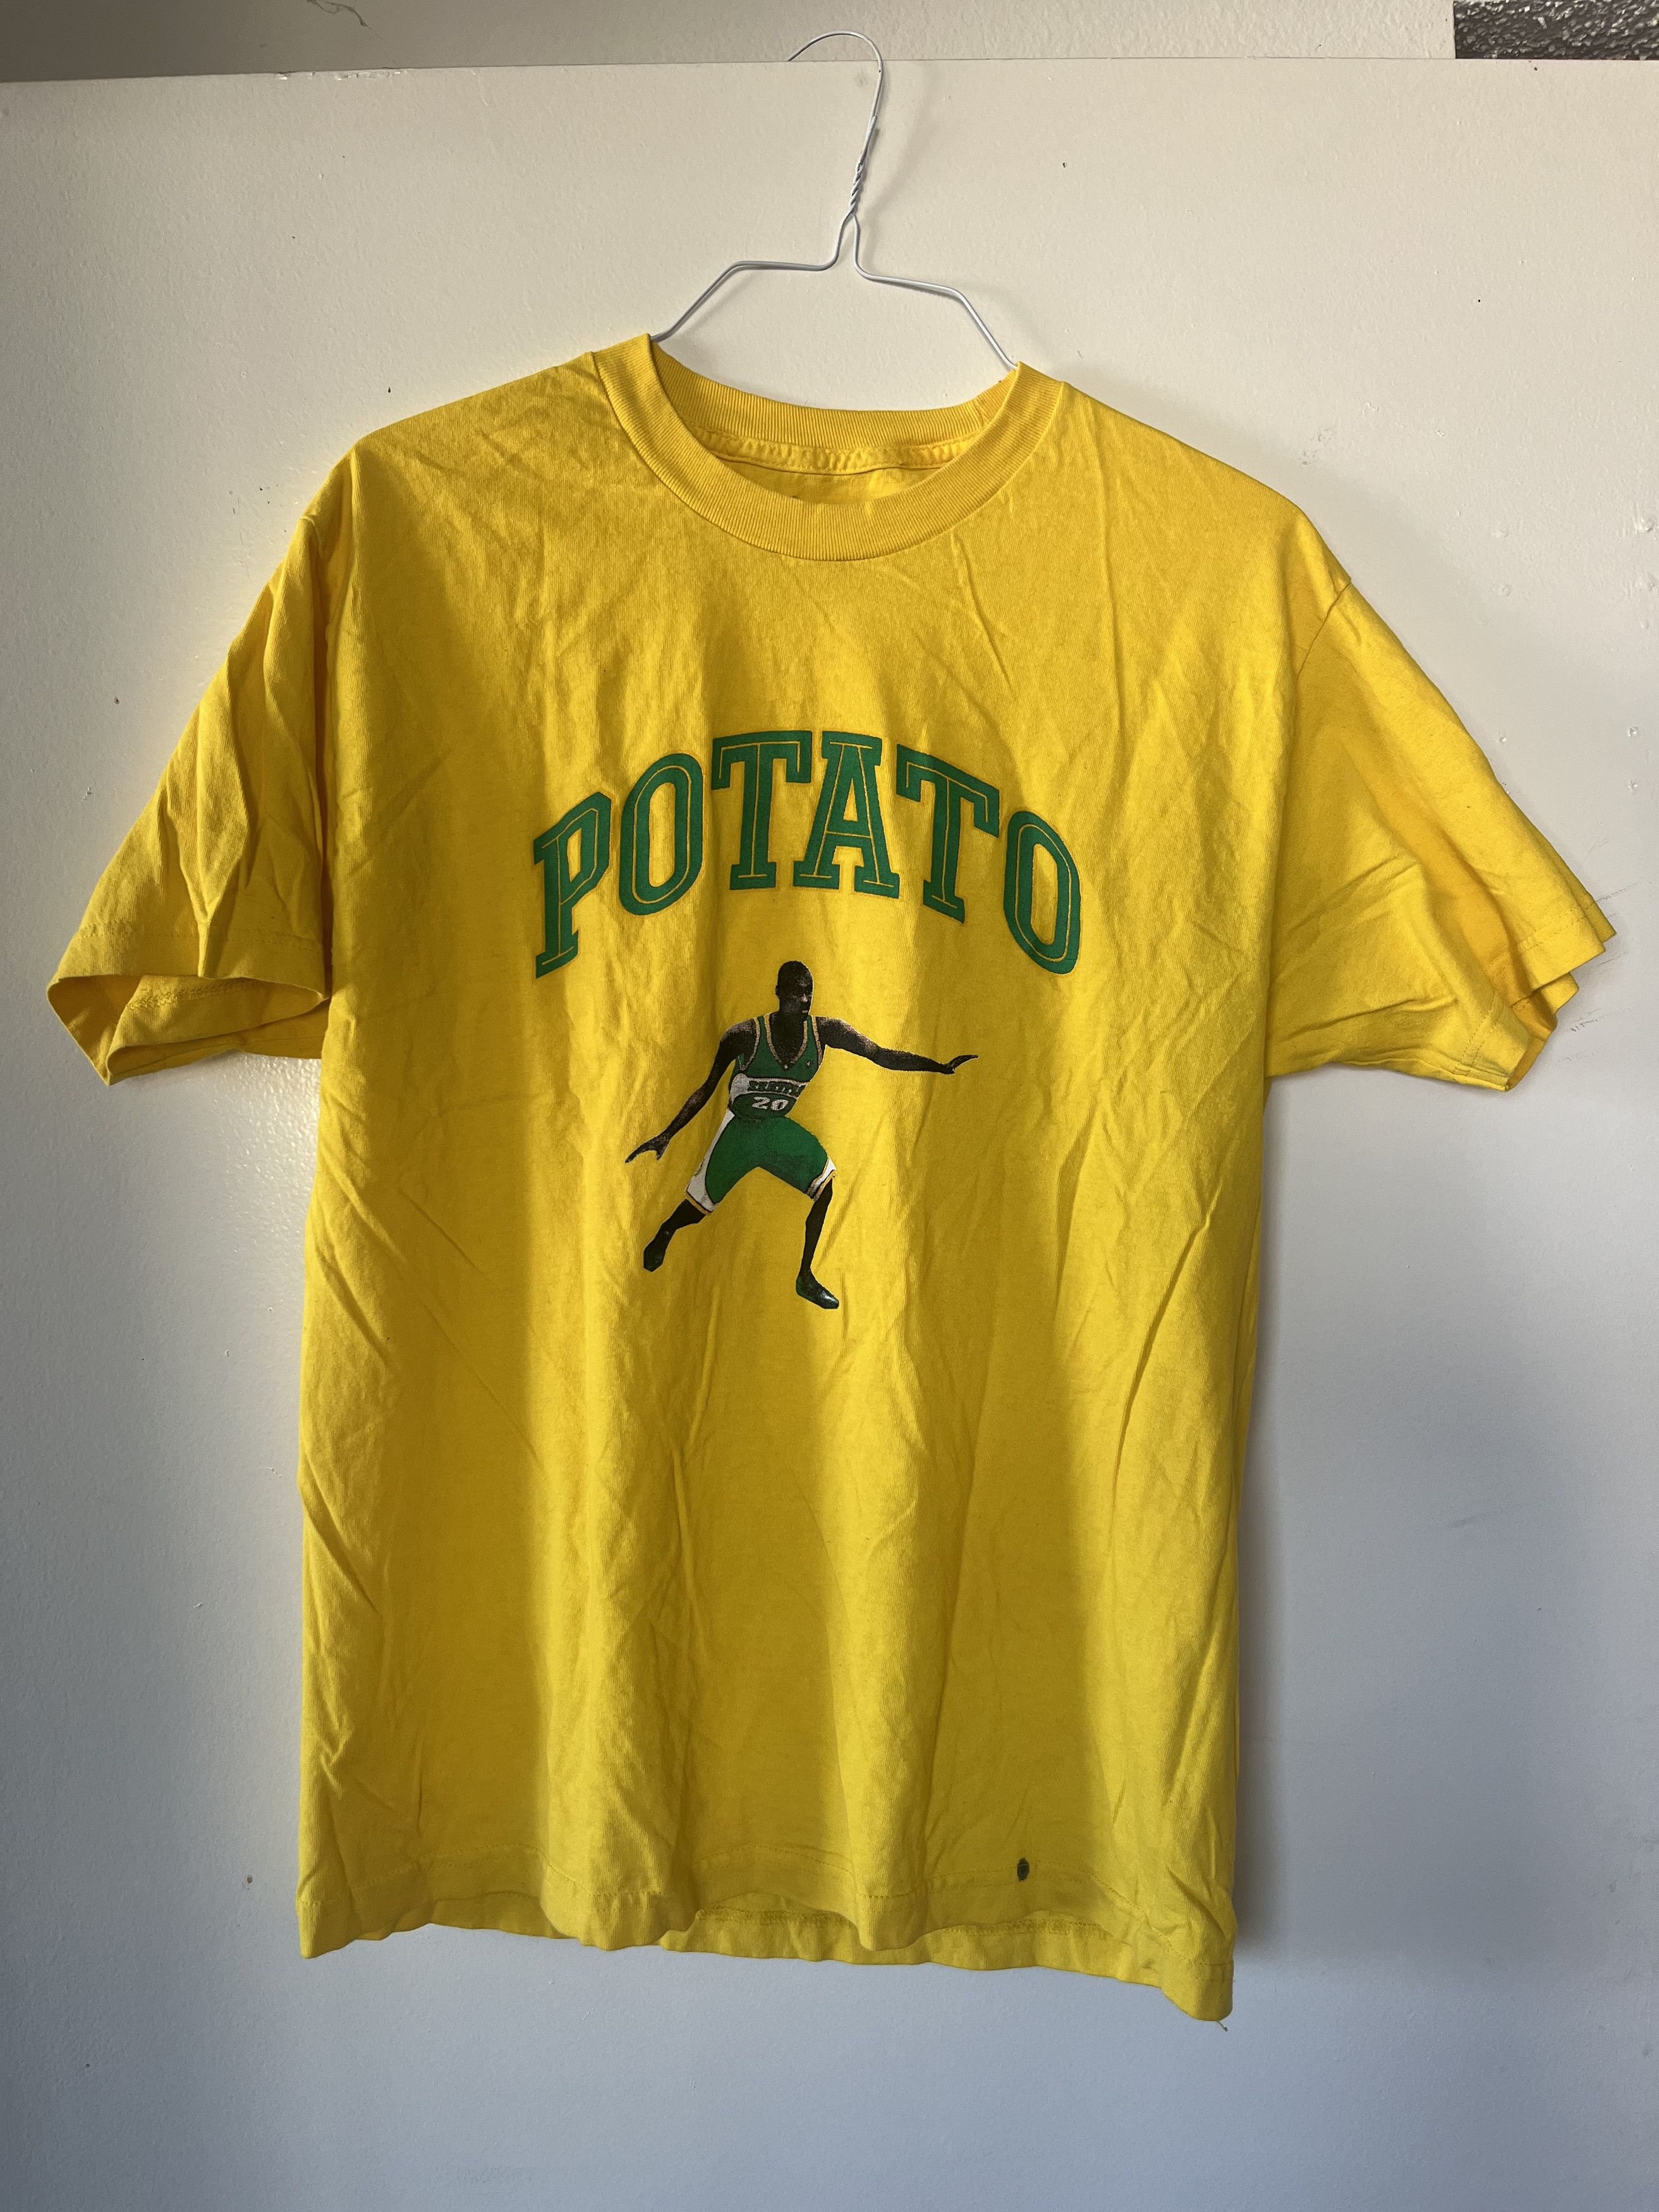 imran potato Gary Payton T Shirt